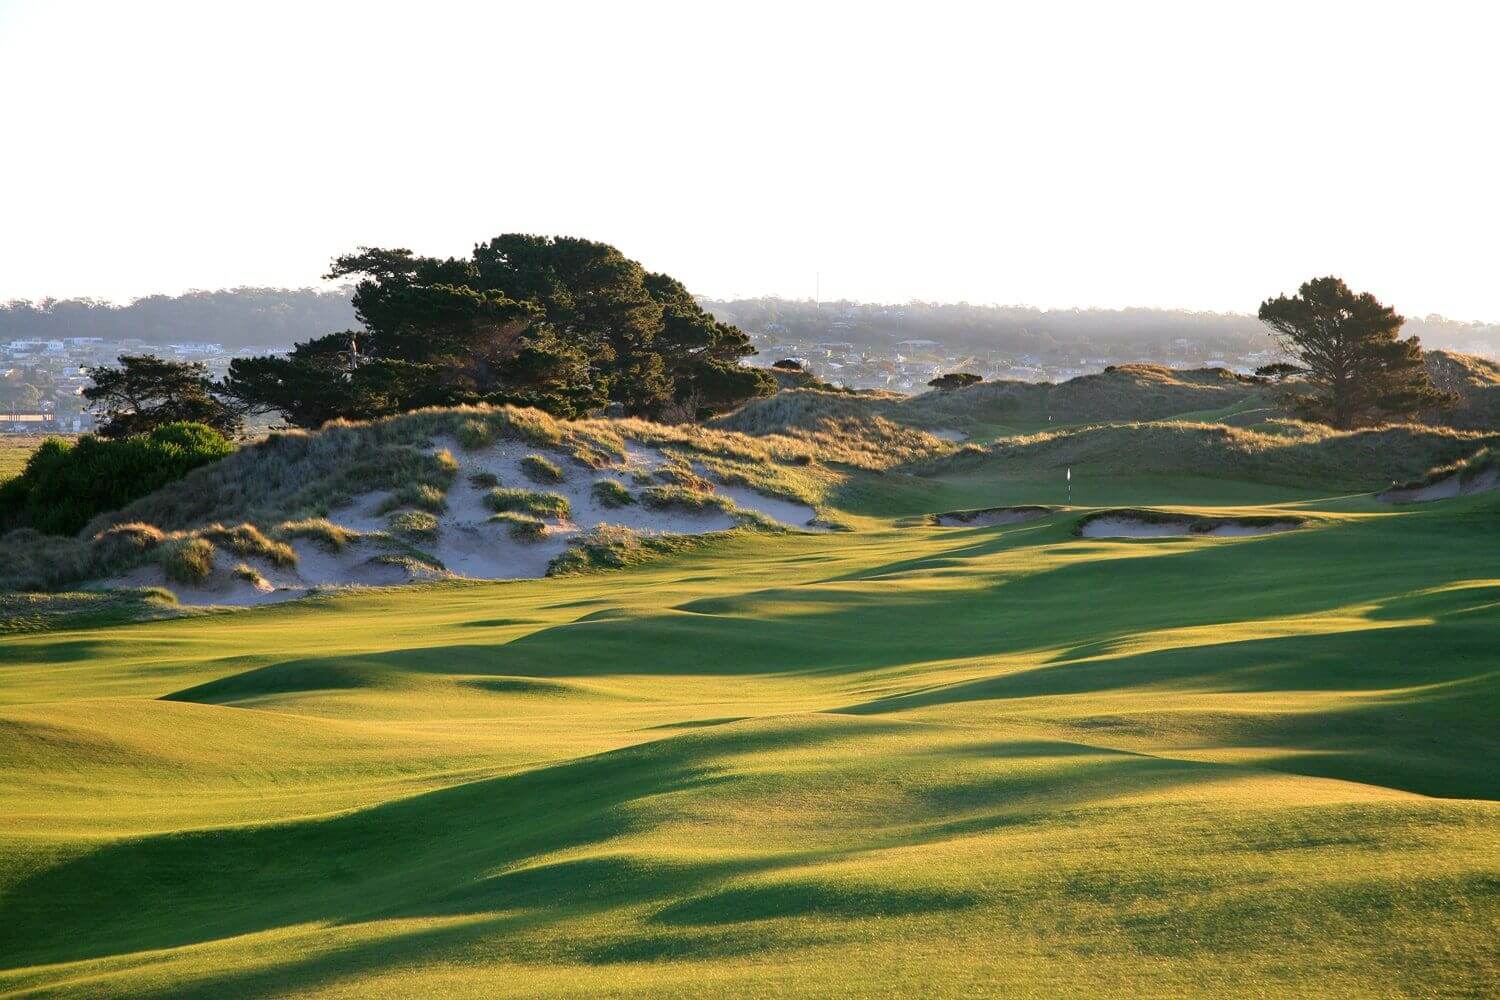 Sunlight casts shadows the golf fairway's undulations